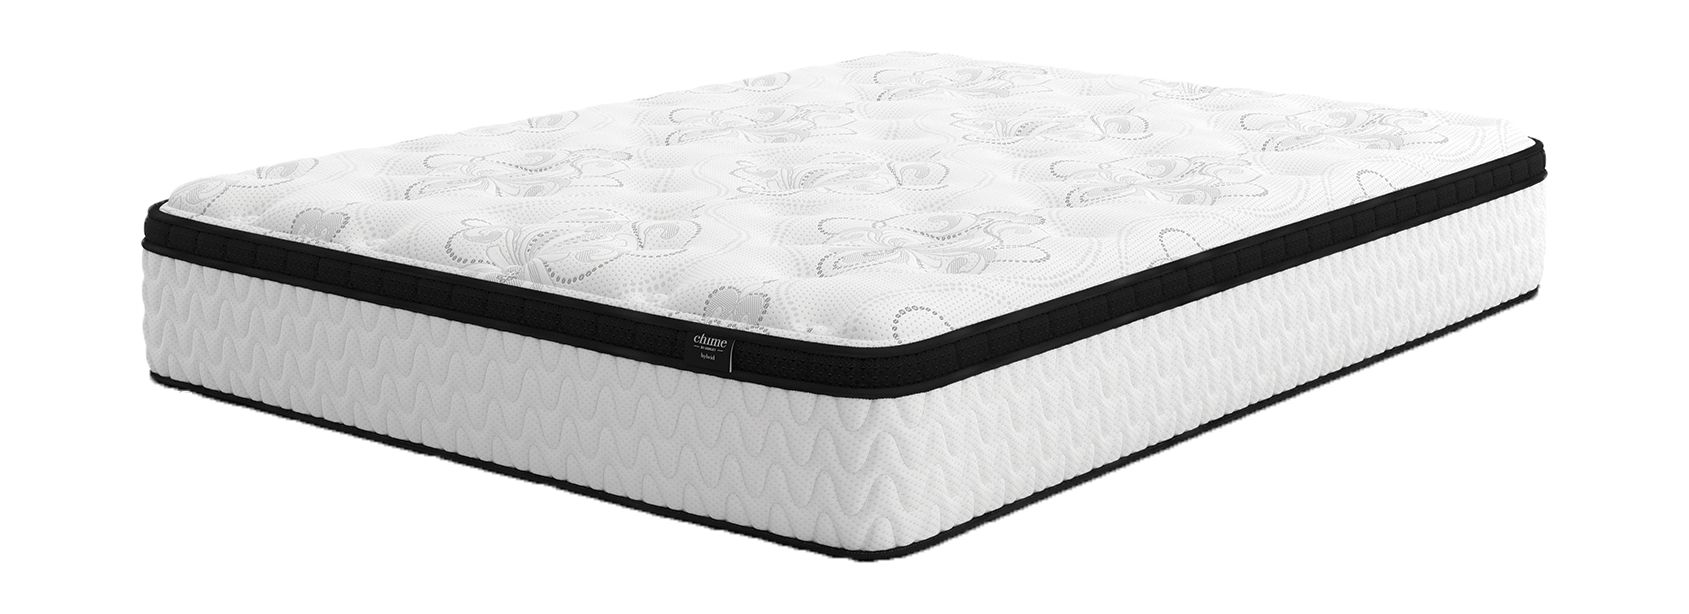 future foam queen mattress 12 inch